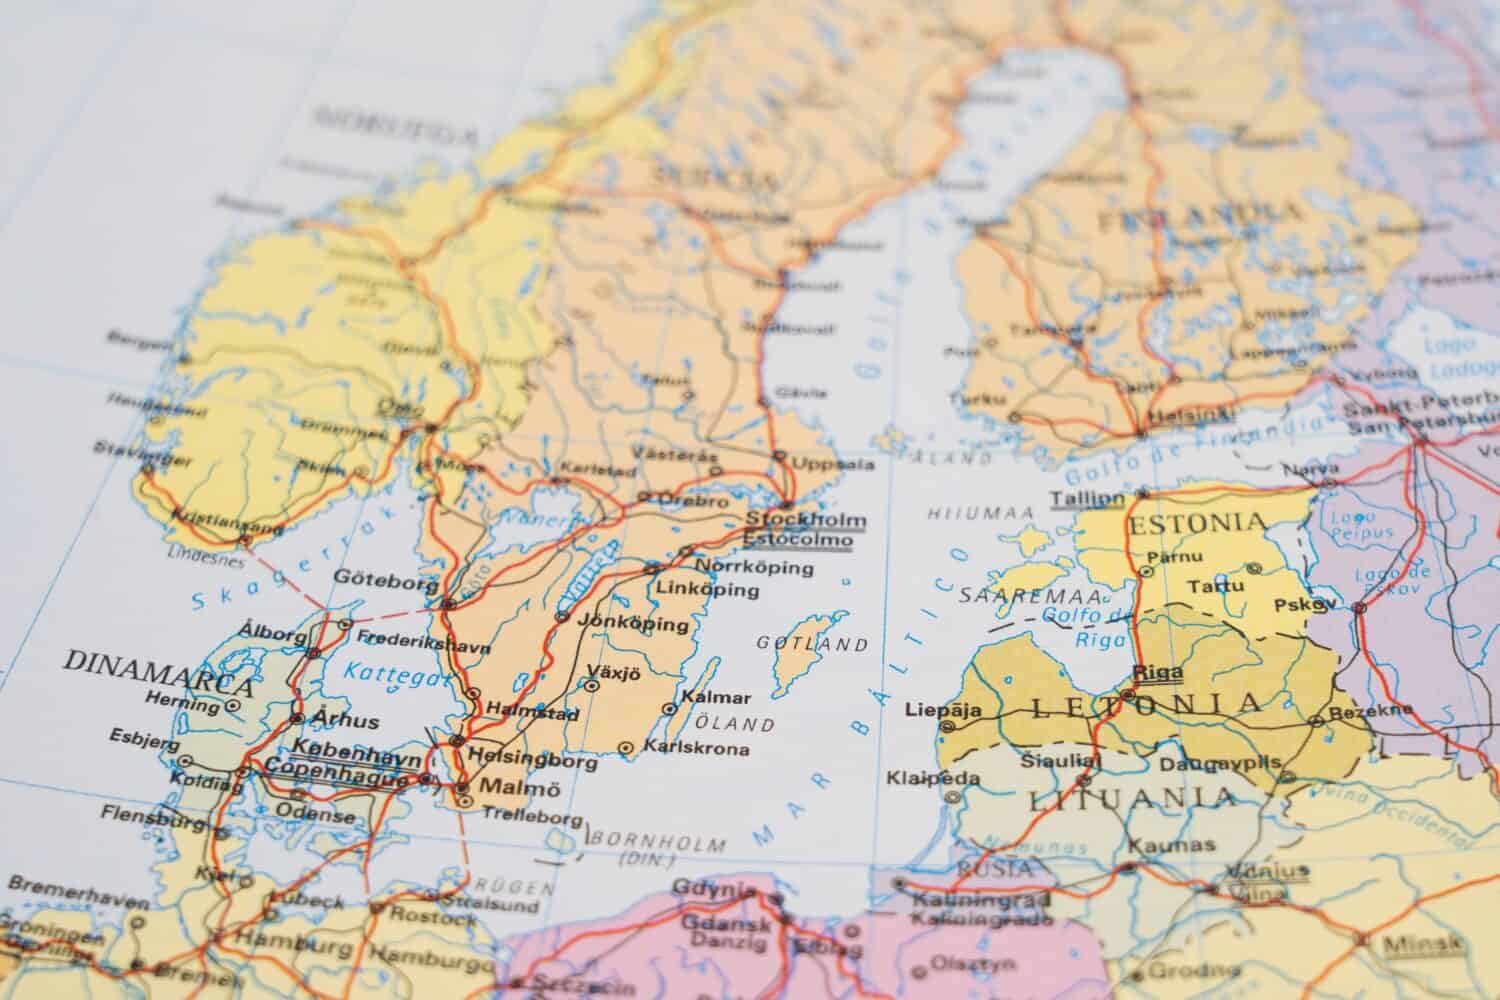 Political Map of Latvia, Estonia, Gotland, Southern Finland, Baltic Sea